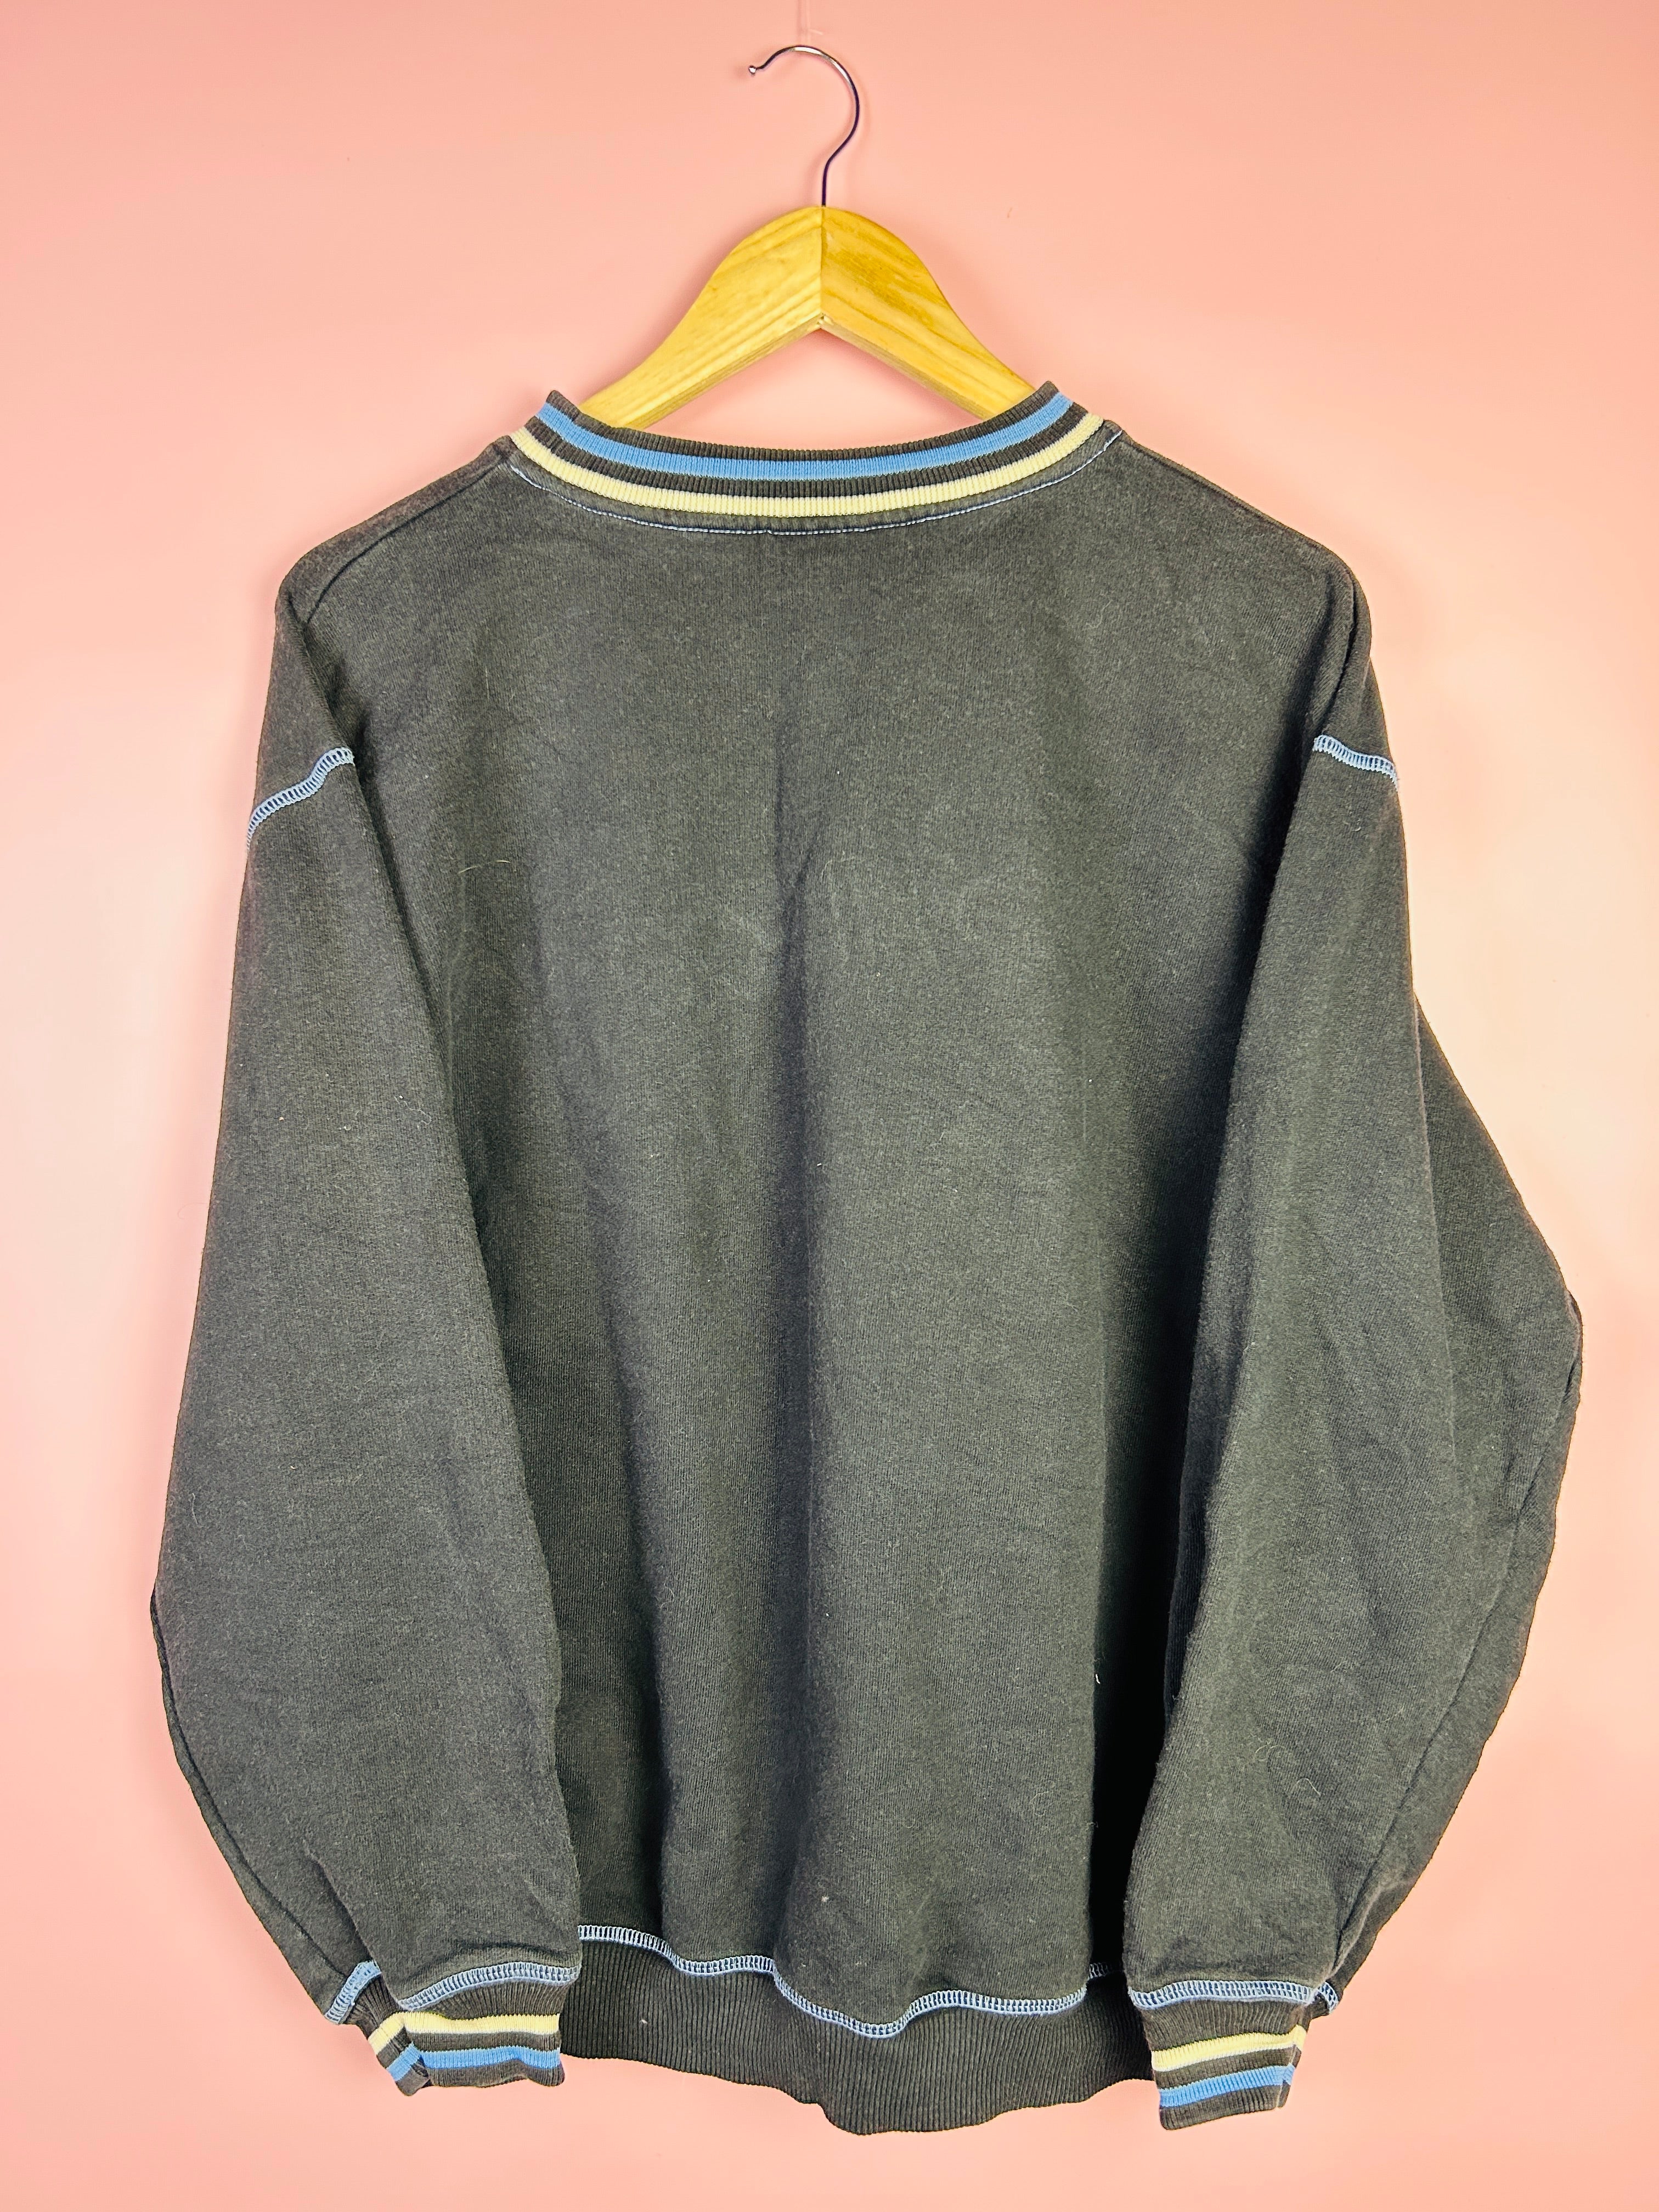 M Vintage Fila Sweater